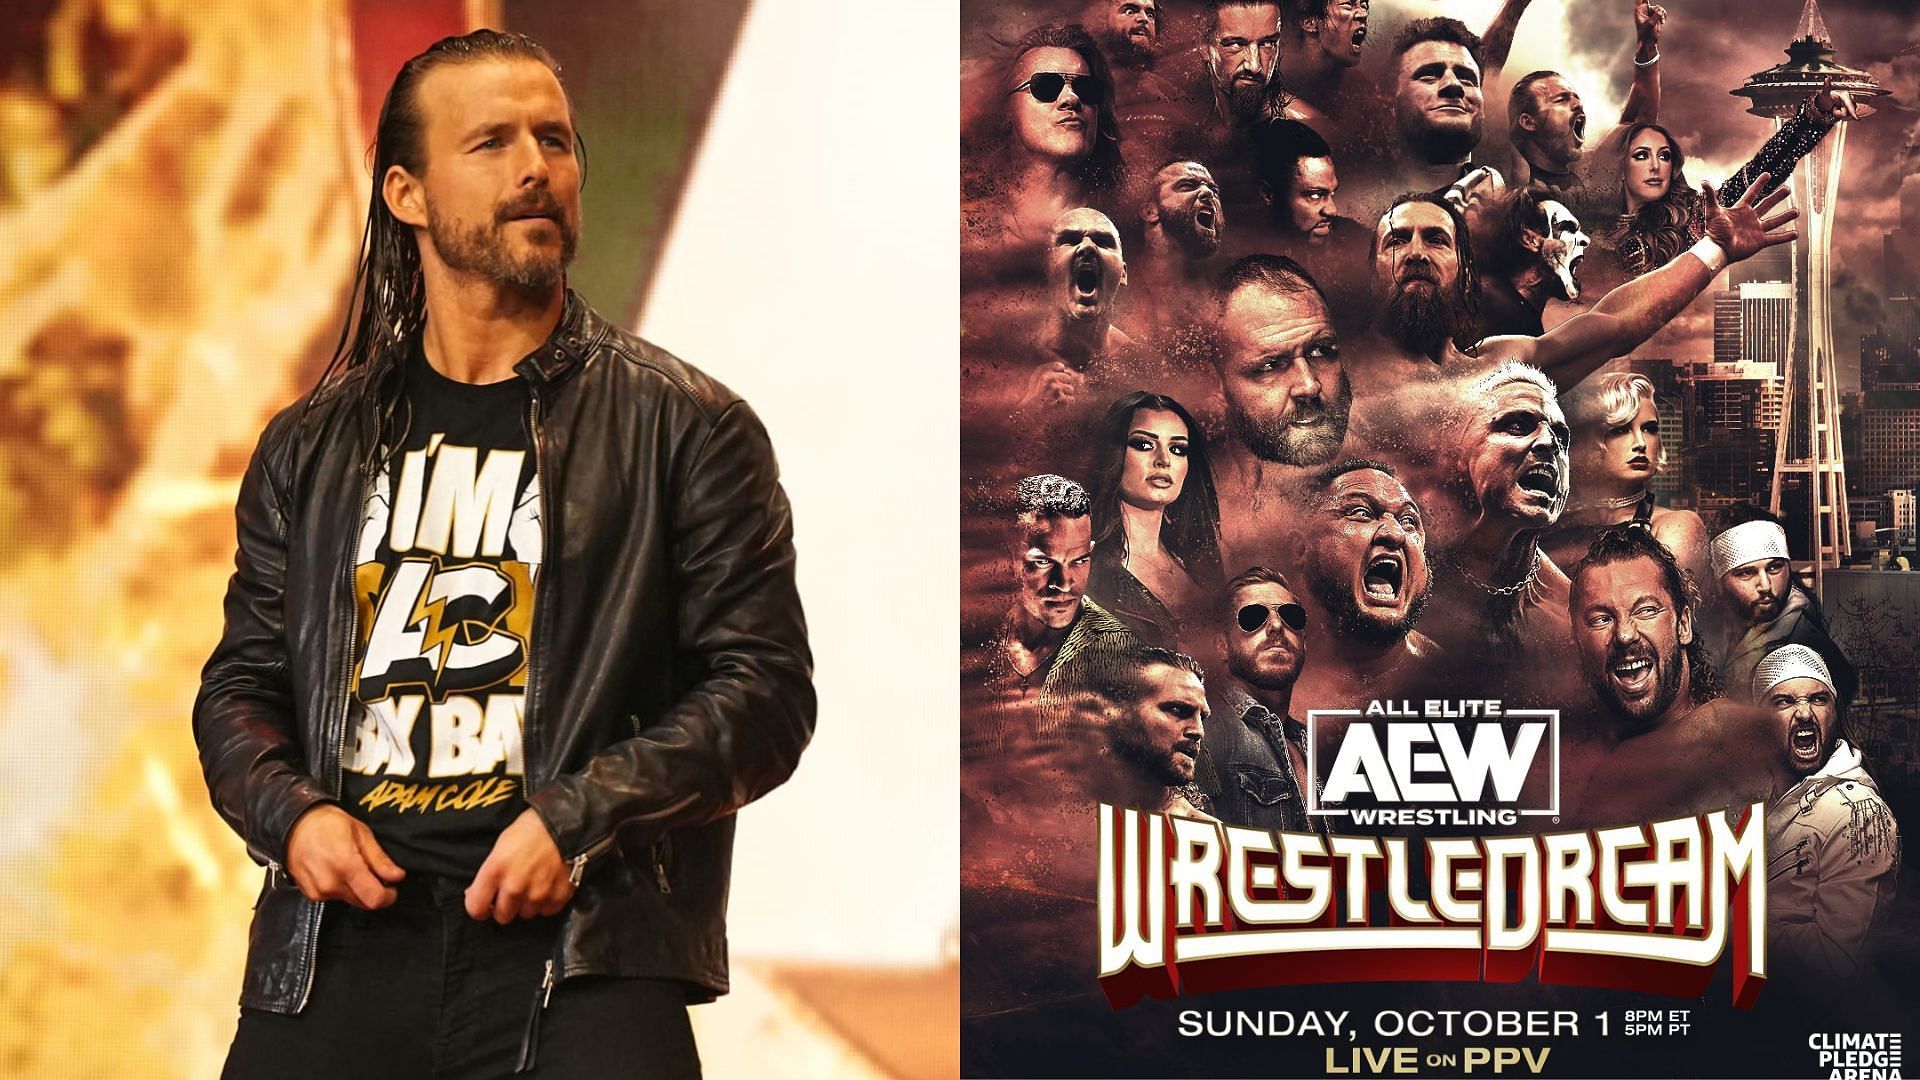 Will Adam Cole make it back in time for AEW WrestleDream?